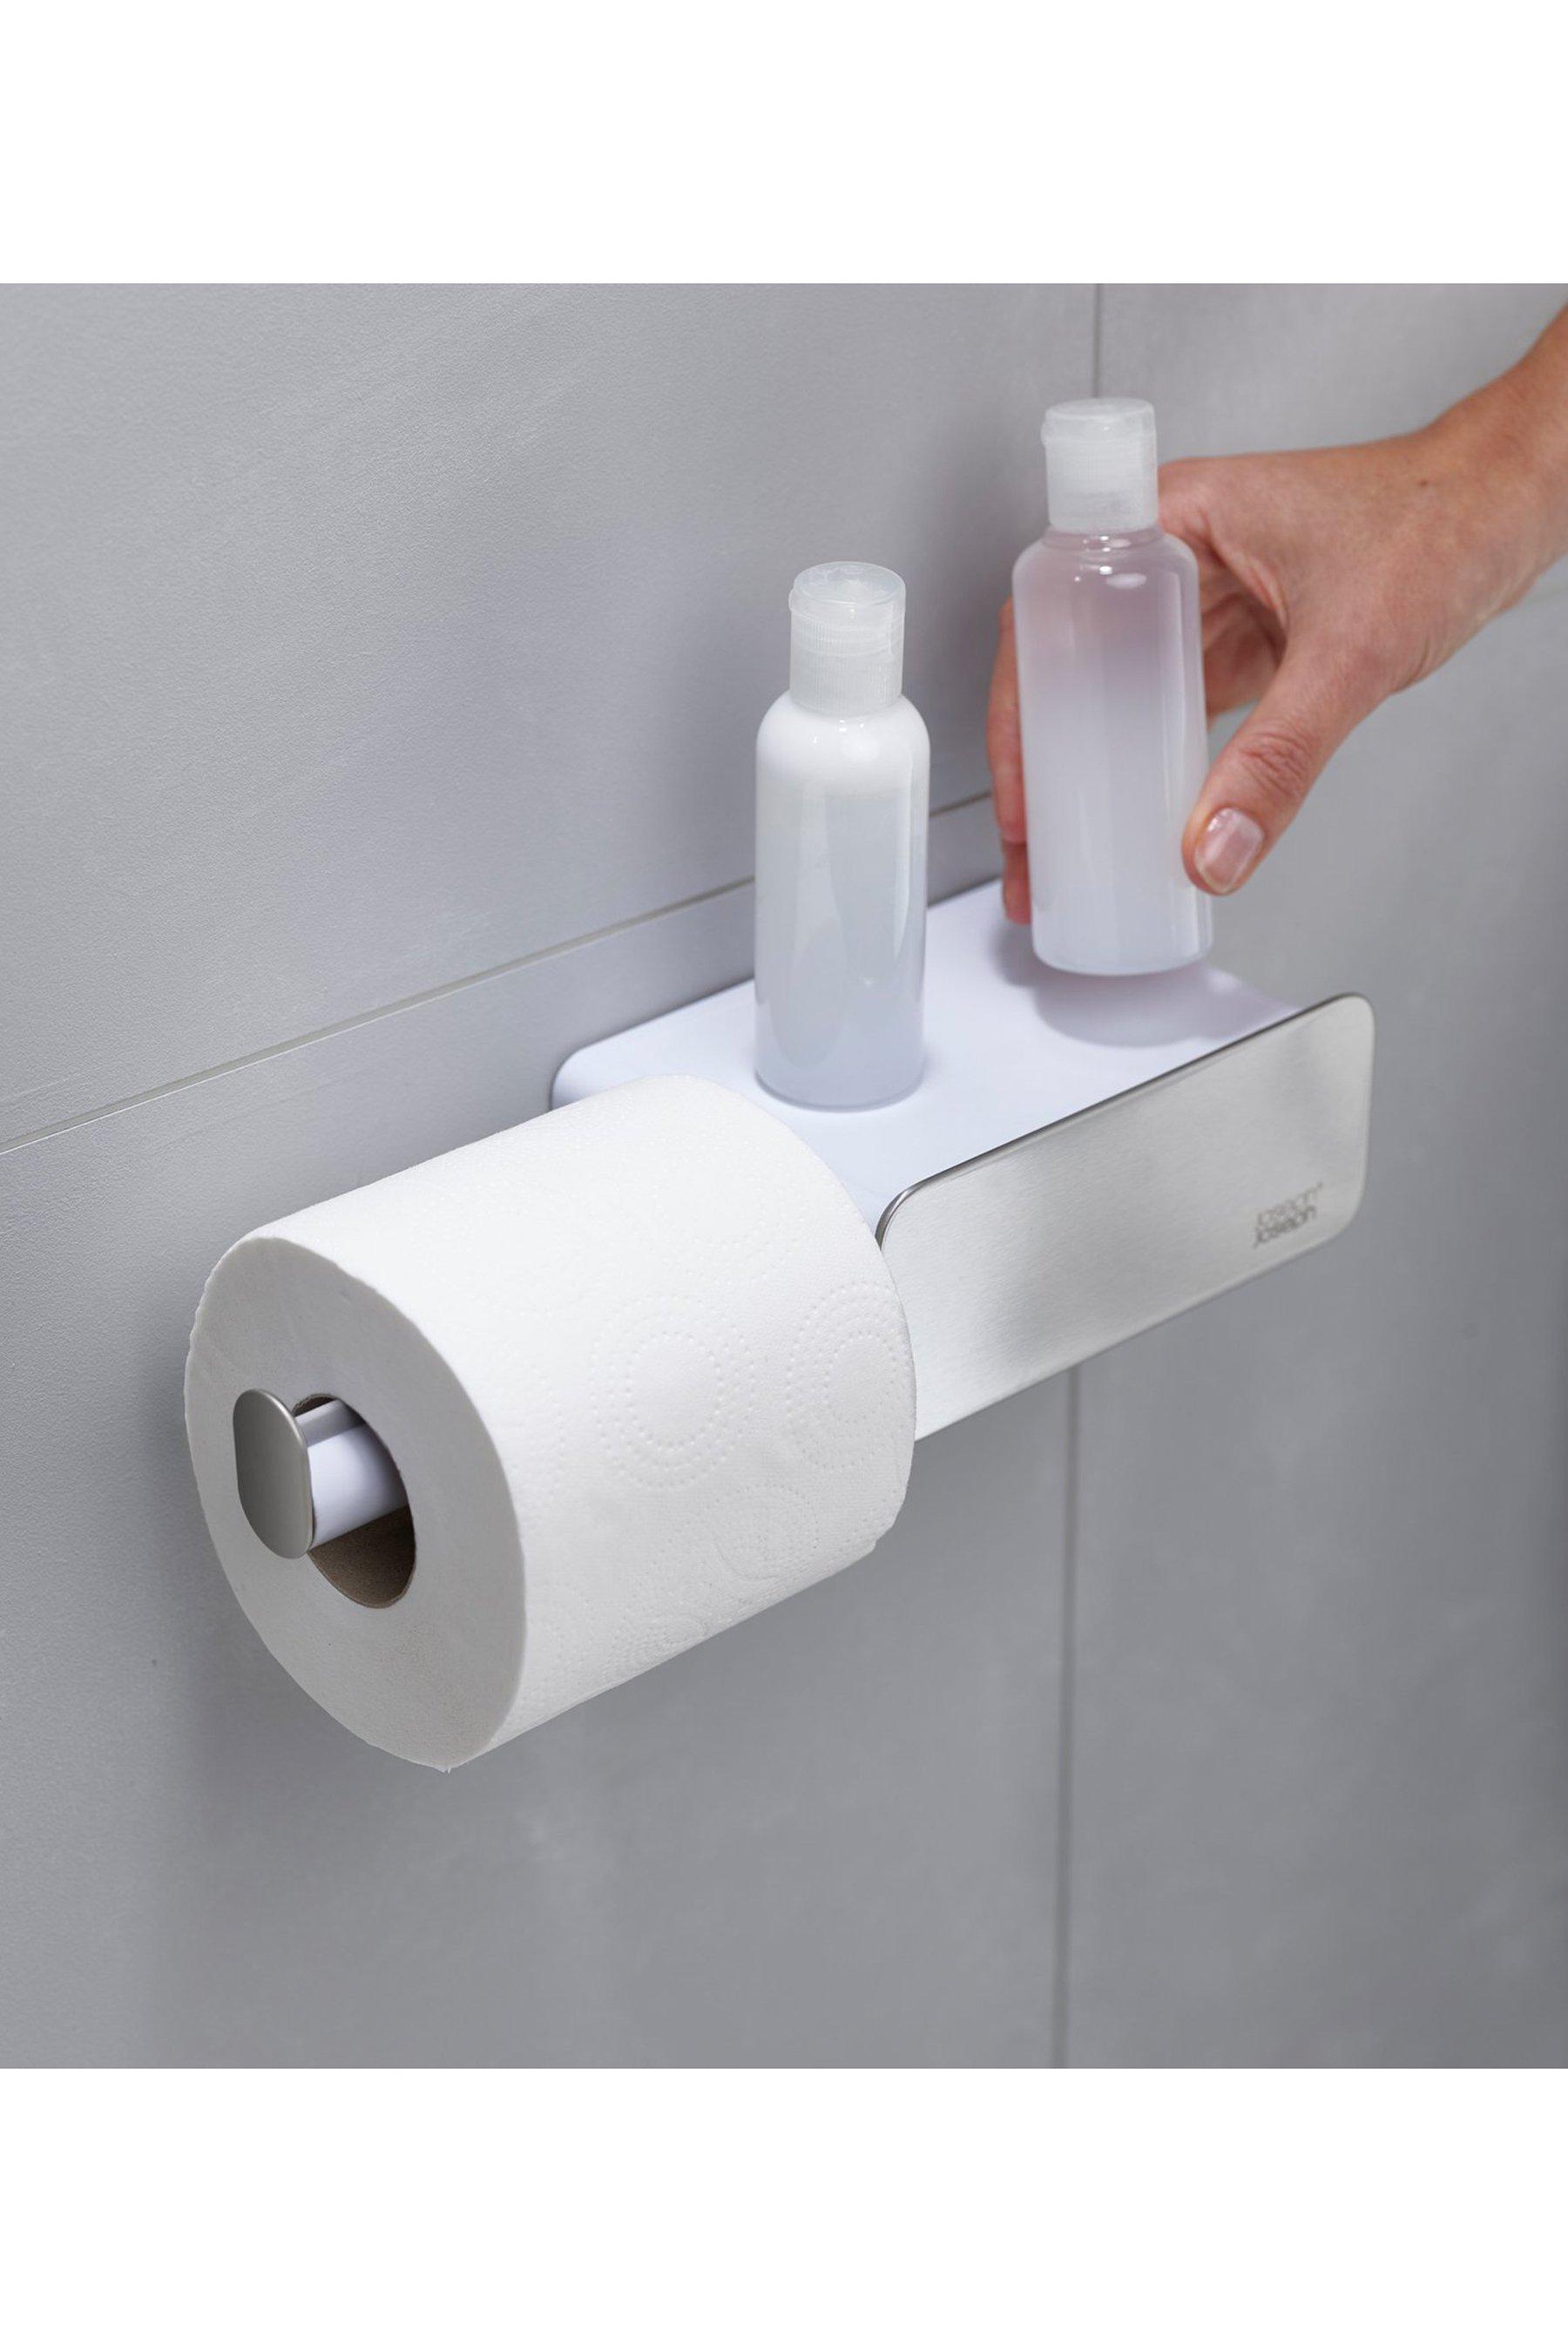 Joseph Joseph Toilet Roll Holder With Storage - White - Plastic